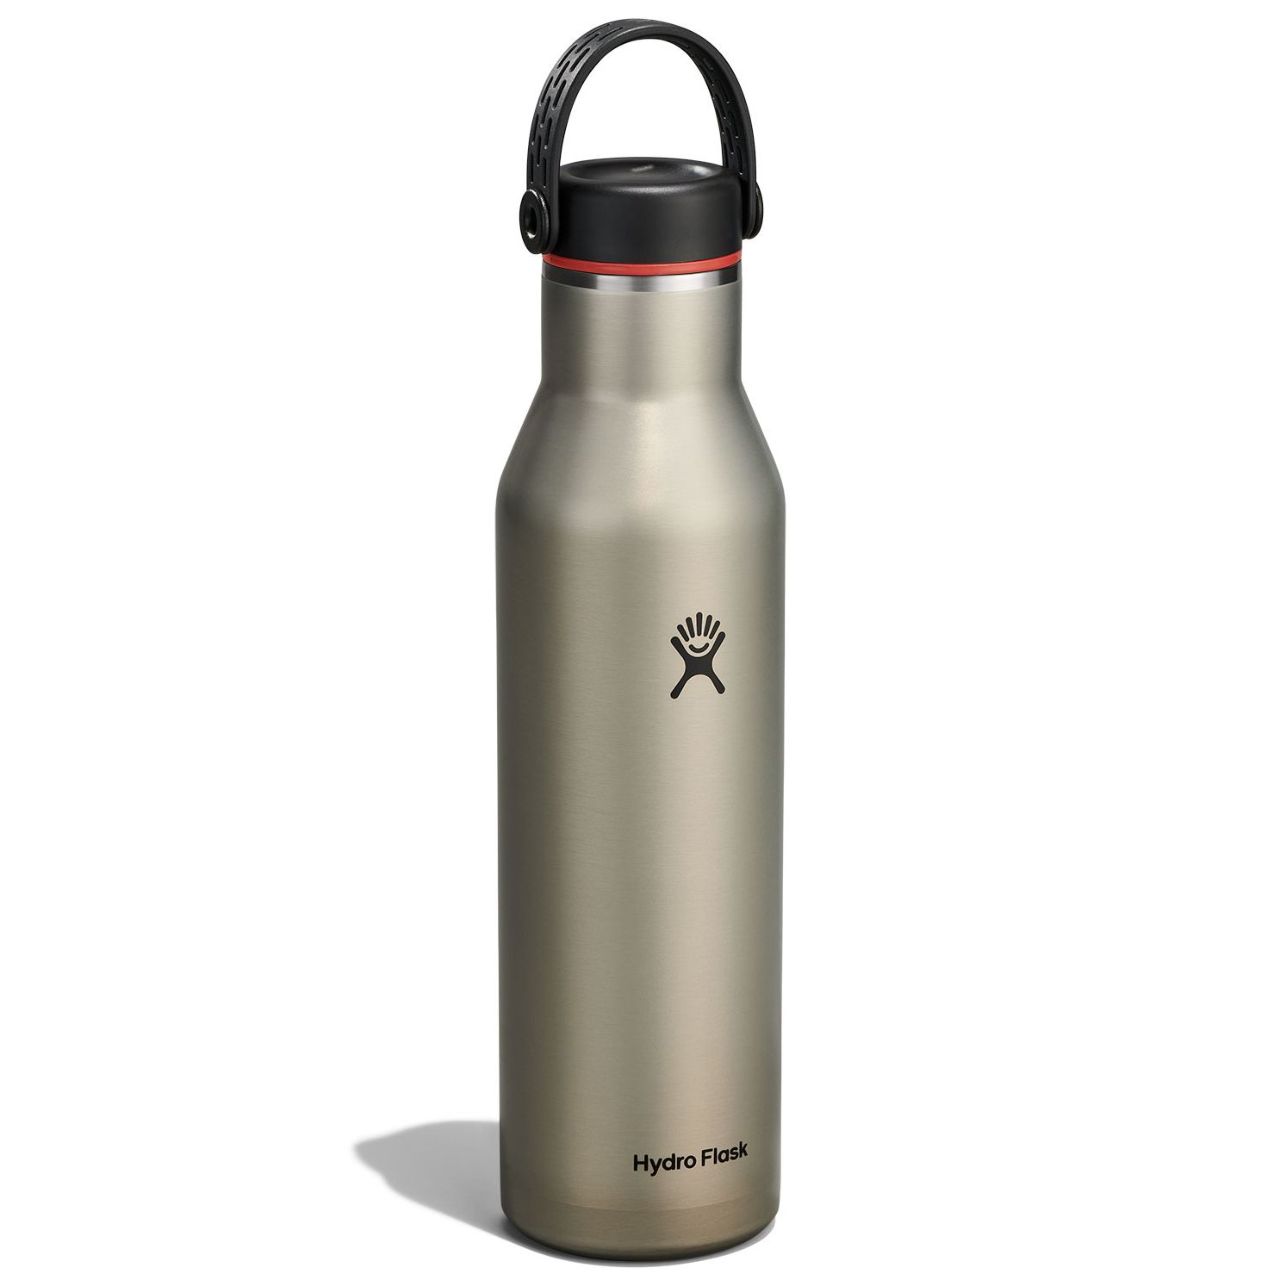  Hydro Flask 21 oz. Water Bottle - Stainless Steel